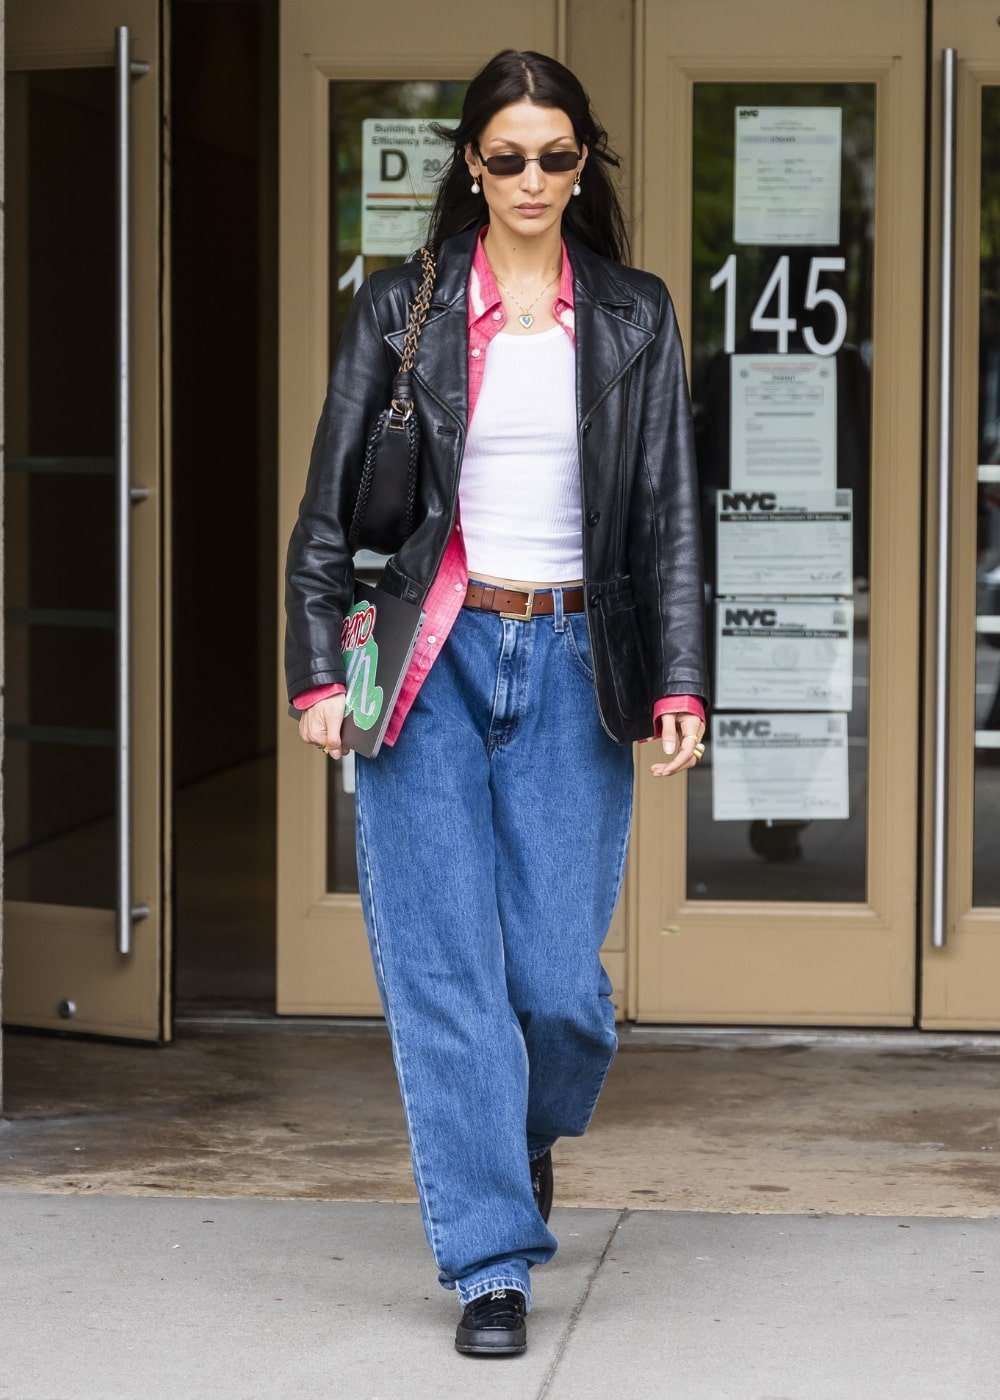 Bella Hadid - calça jeans, regata branca, jaqueta oversized e tenis - looks básicos - Inverno  - andando na rua - https://stealthelook.com.br